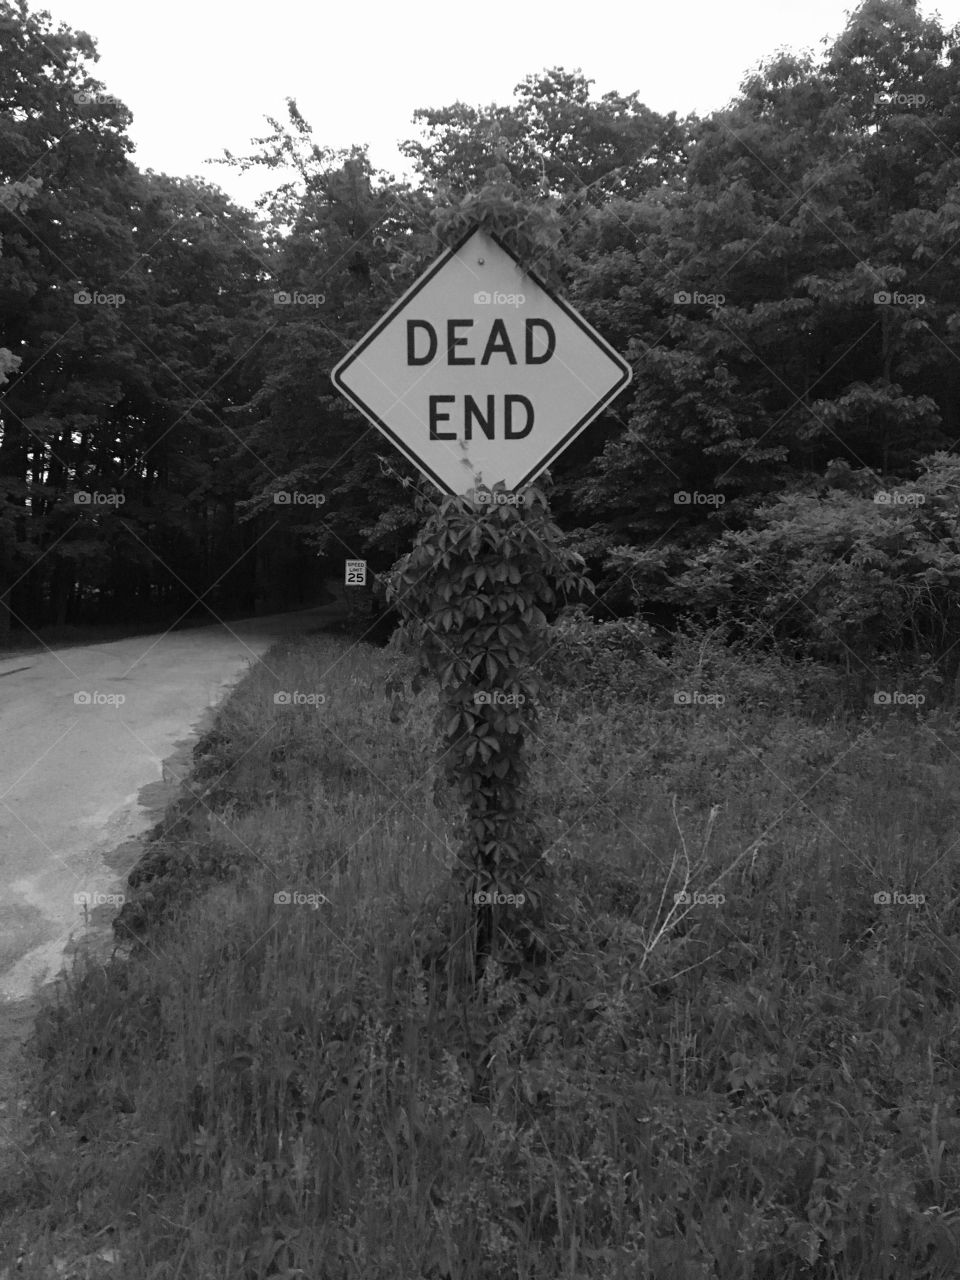 A Dead End Road